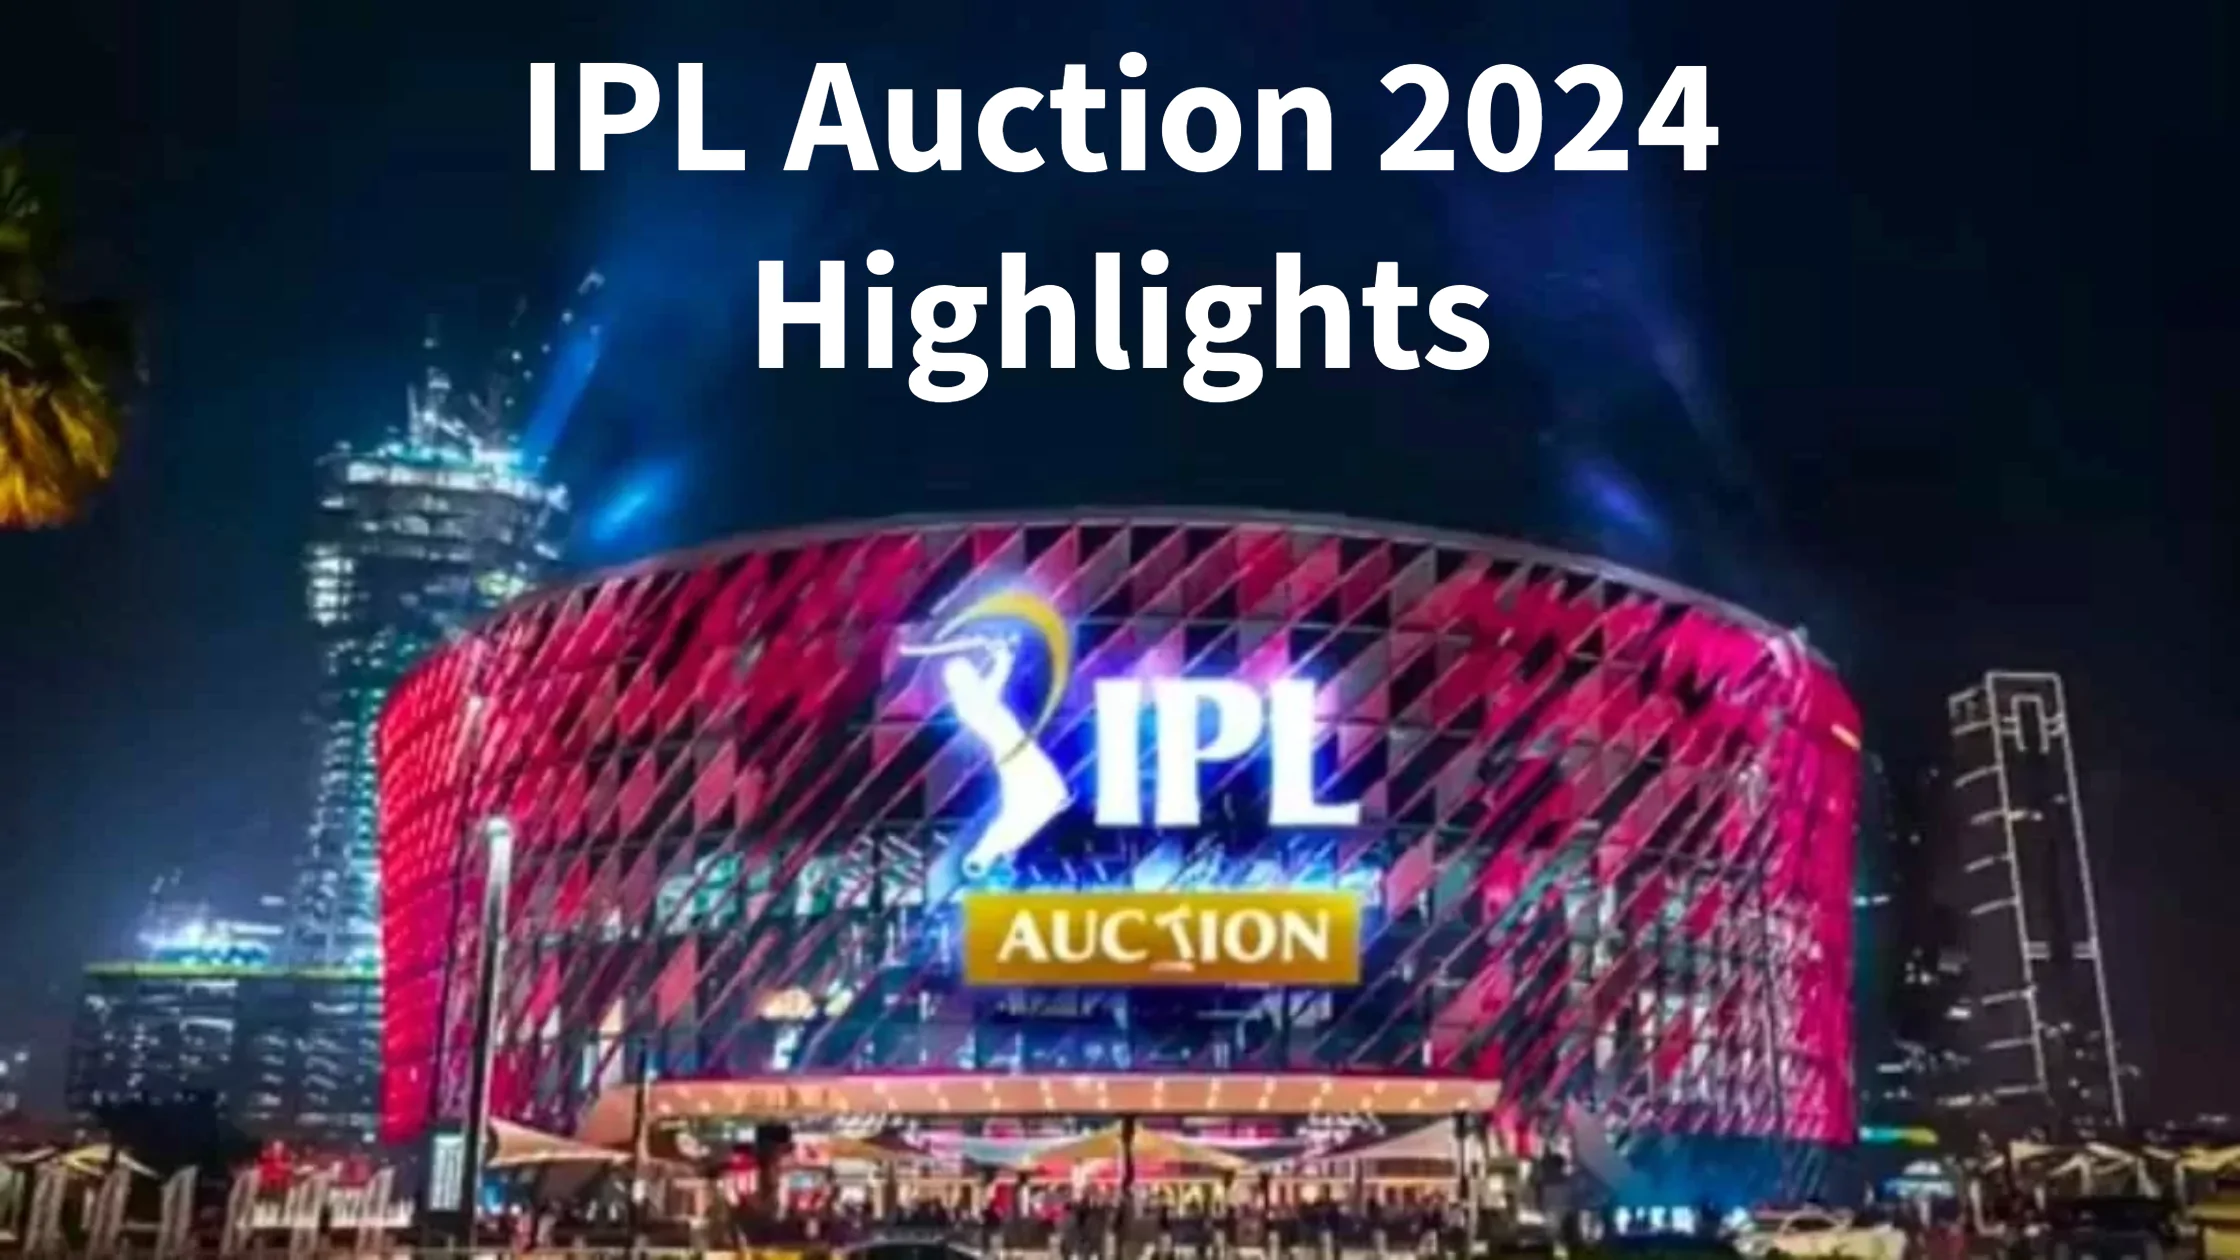 IPL Auction 2024 Highlights